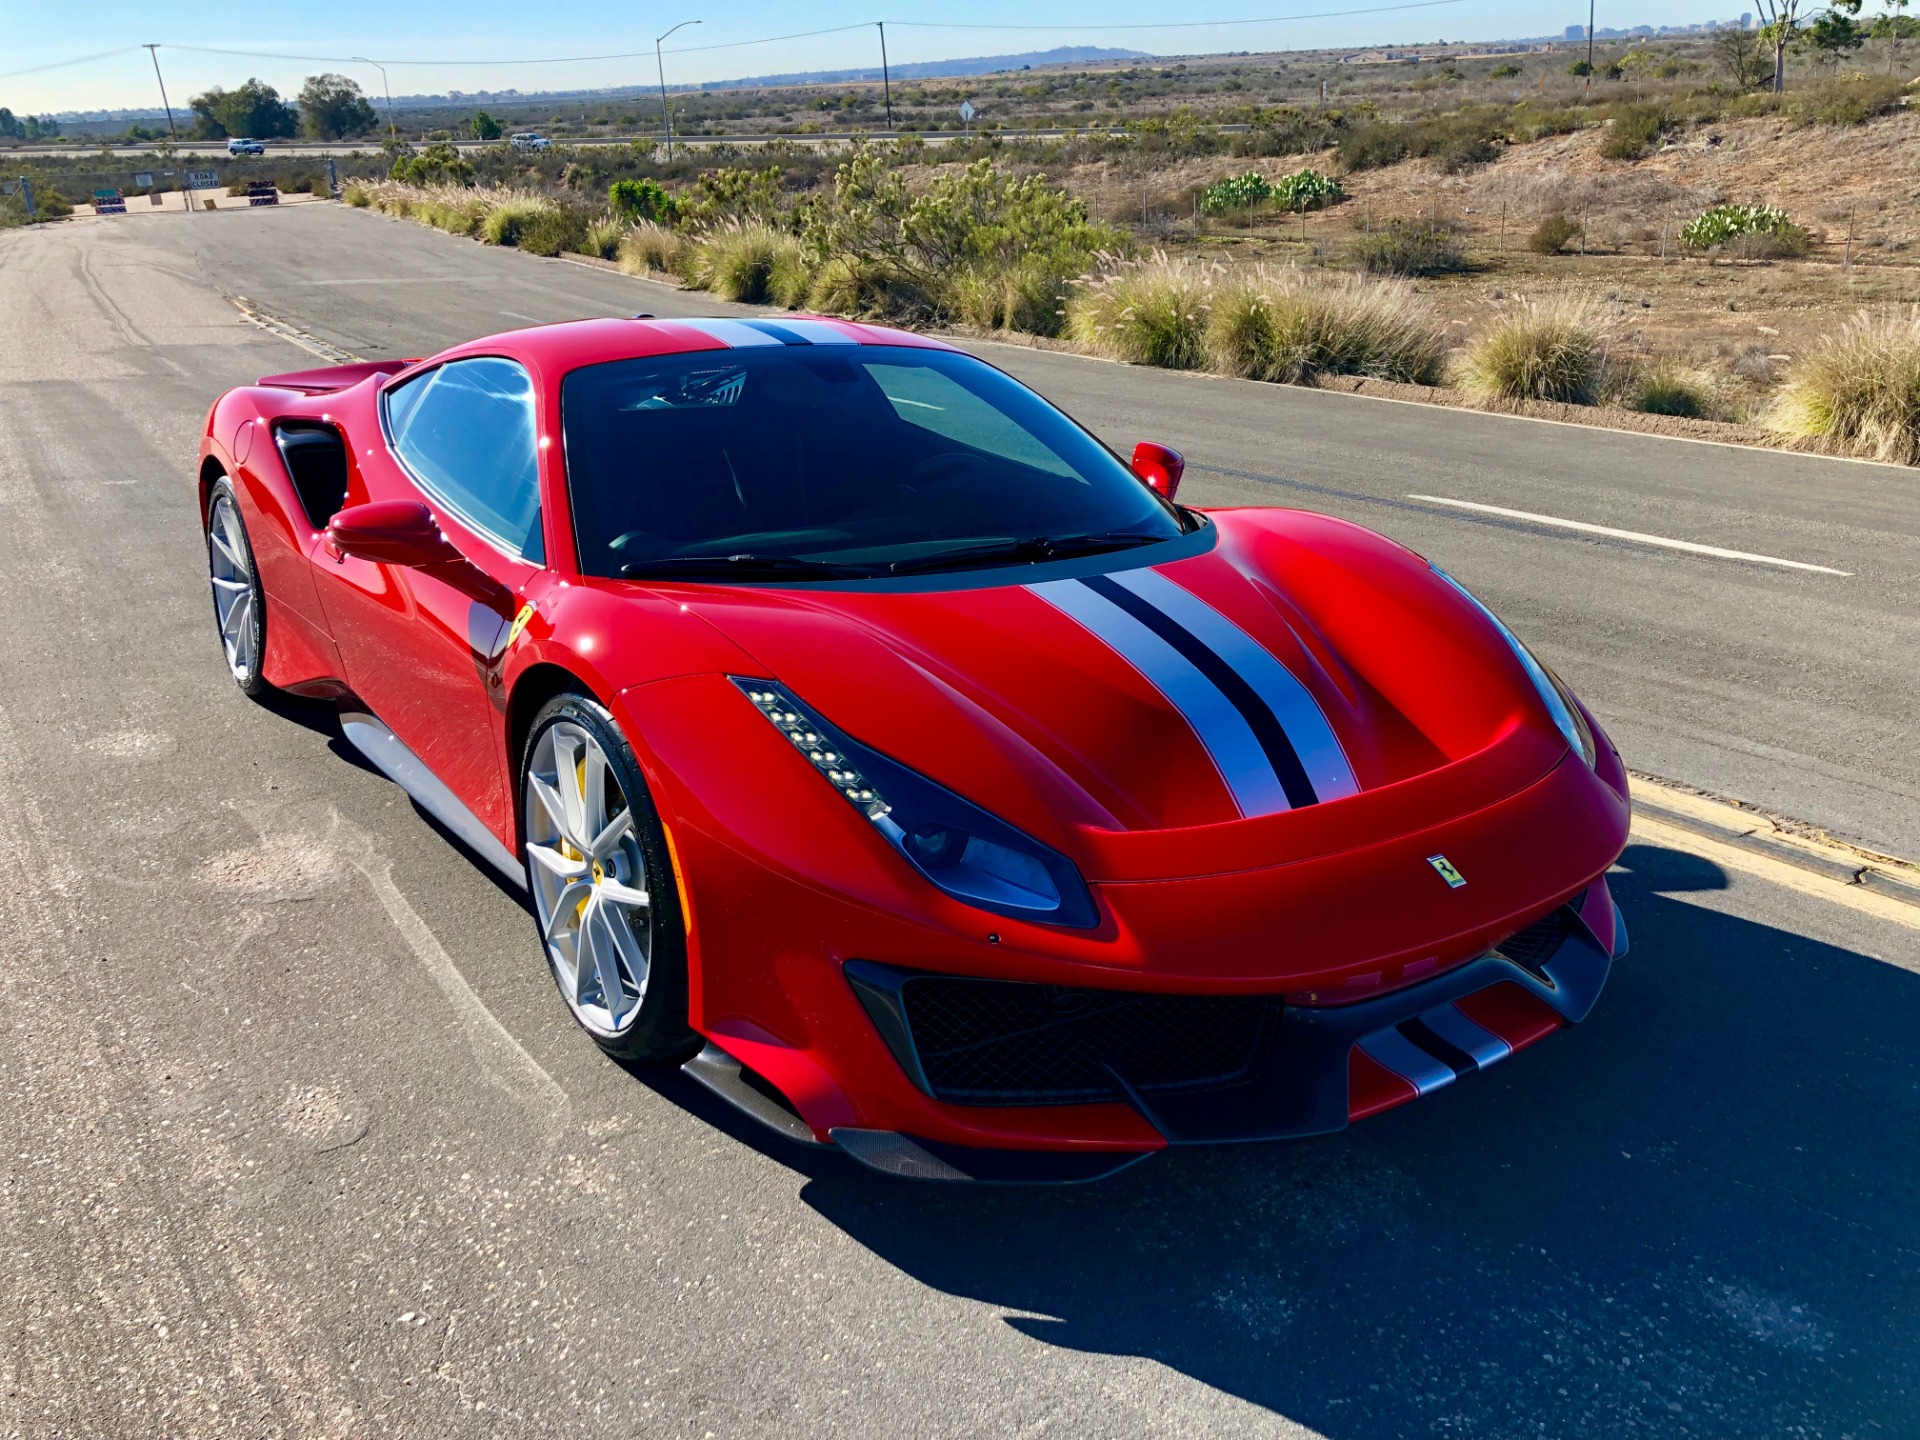 Used 2019 Ferrari 488 Pista For Sale Special Pricing Bj Motors Stock 2019pista